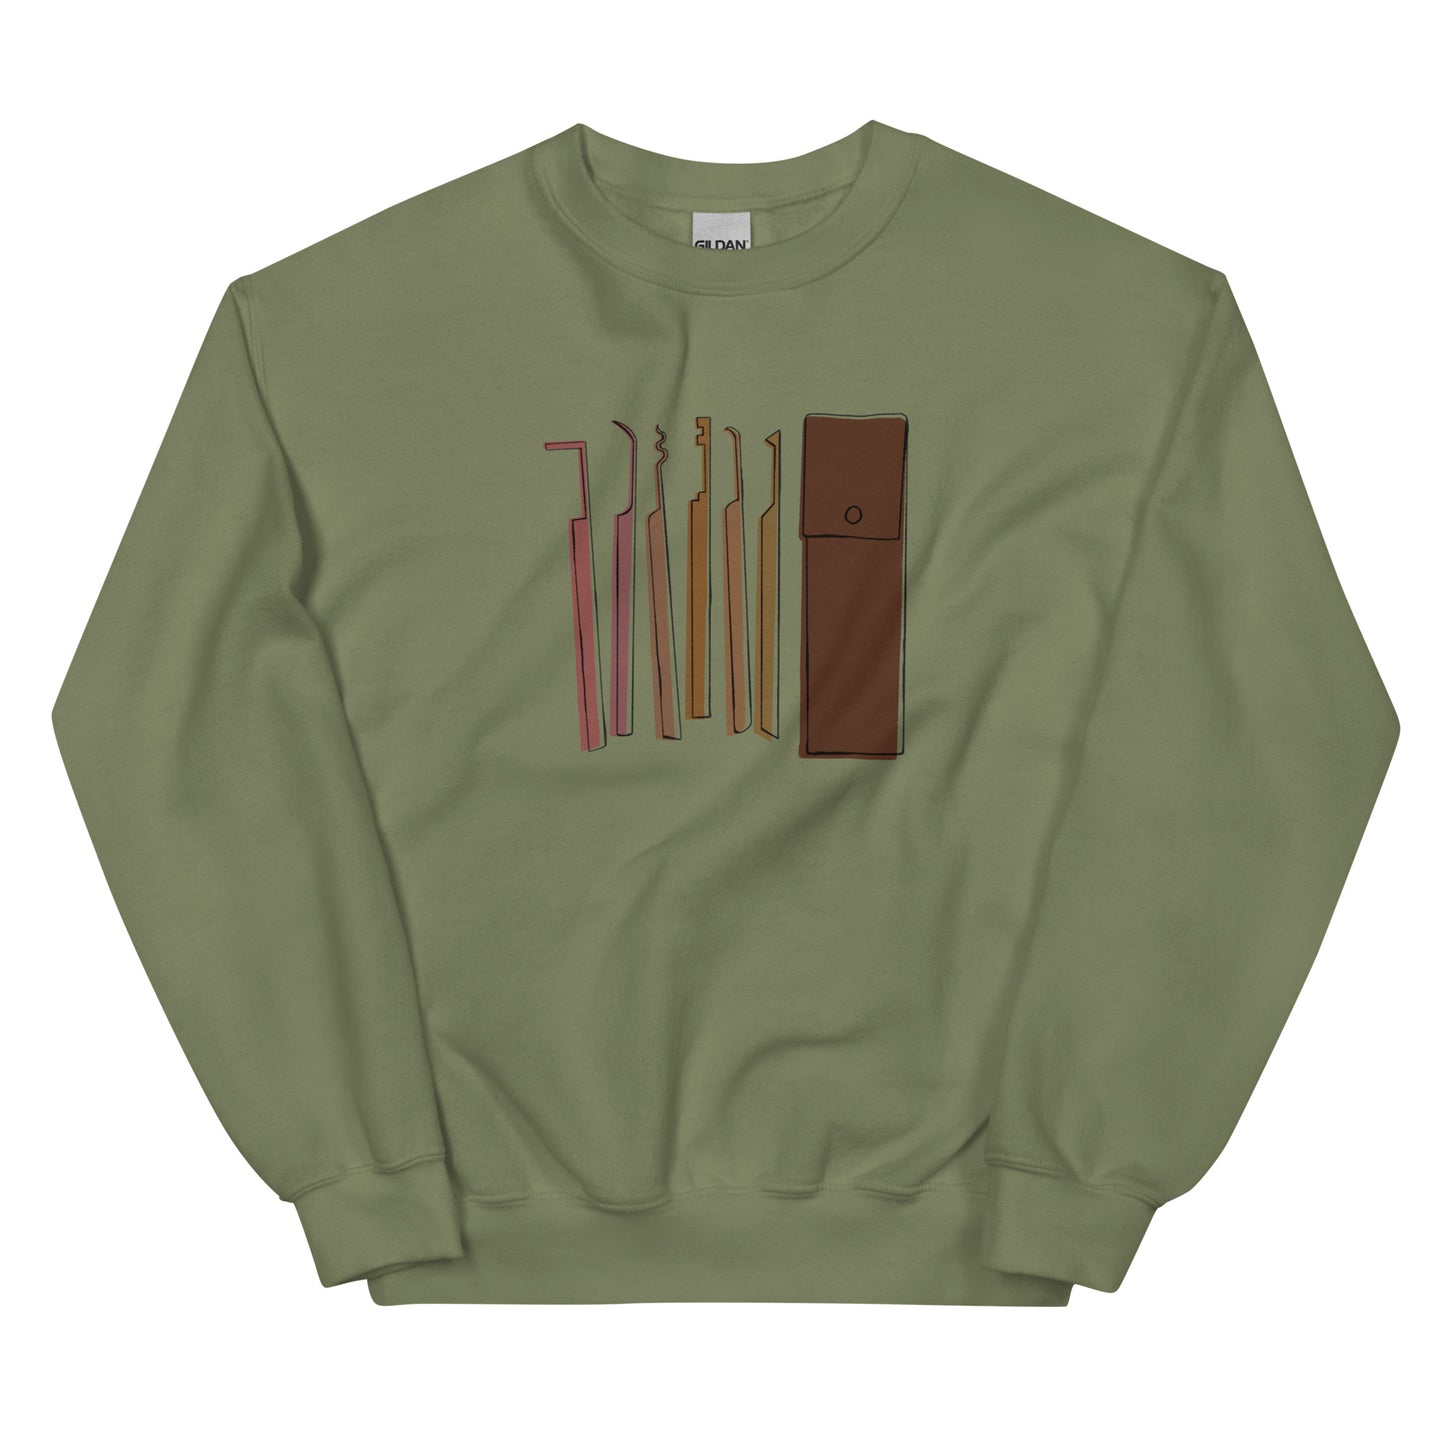 tools of the trade - lockpicks sweater